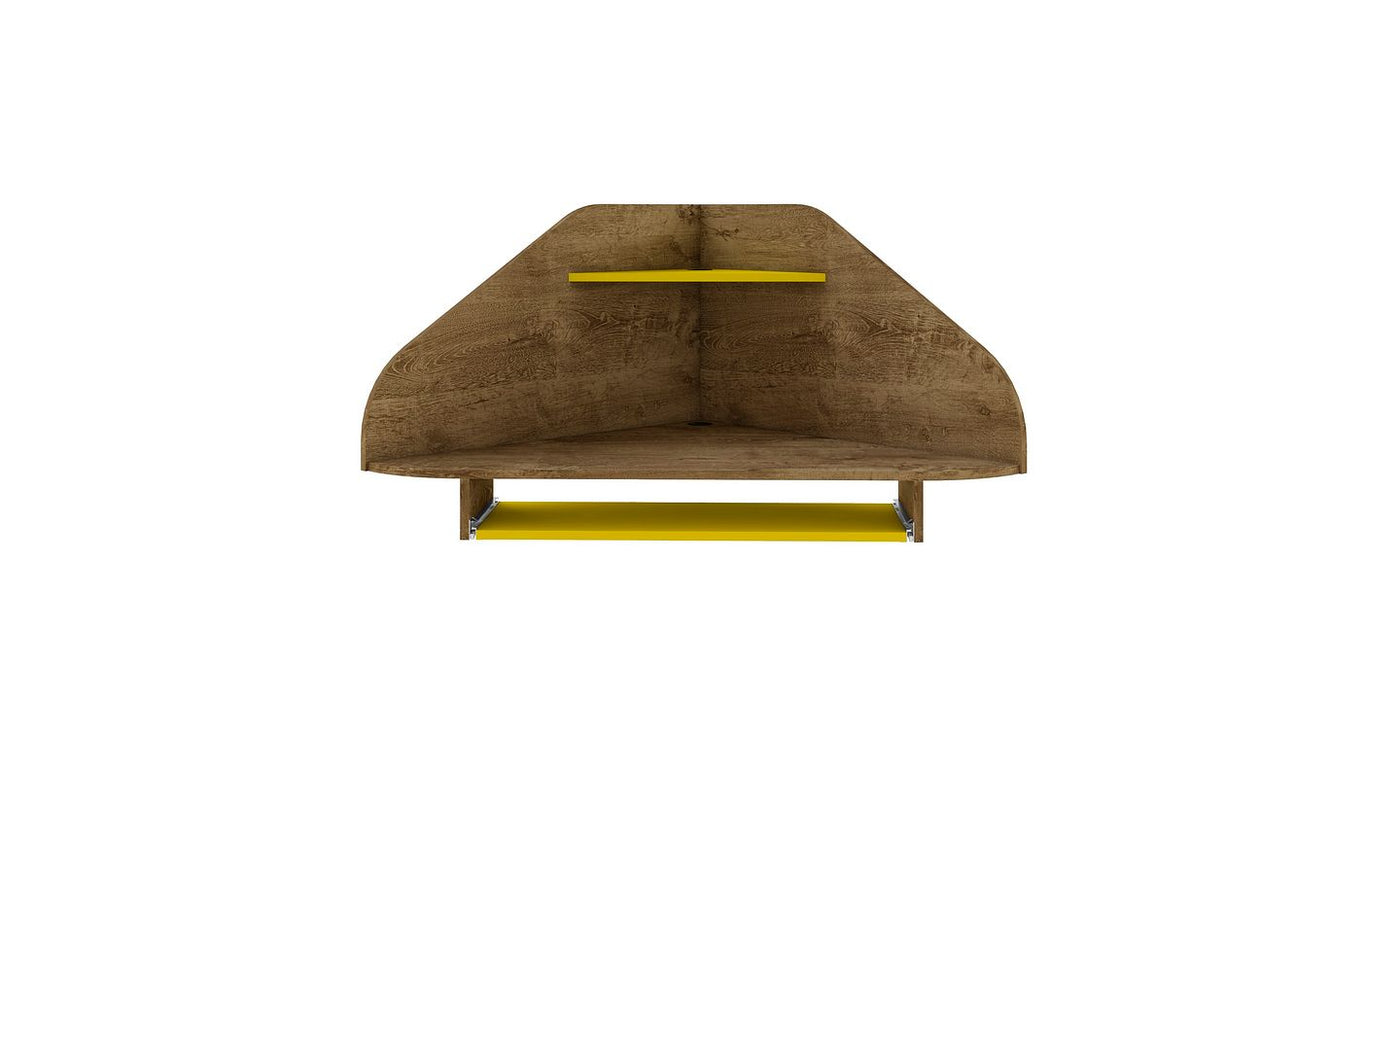 Gatutca Floating Corner Desk With Keyboard Shelf - Rustic Brown / Yellow